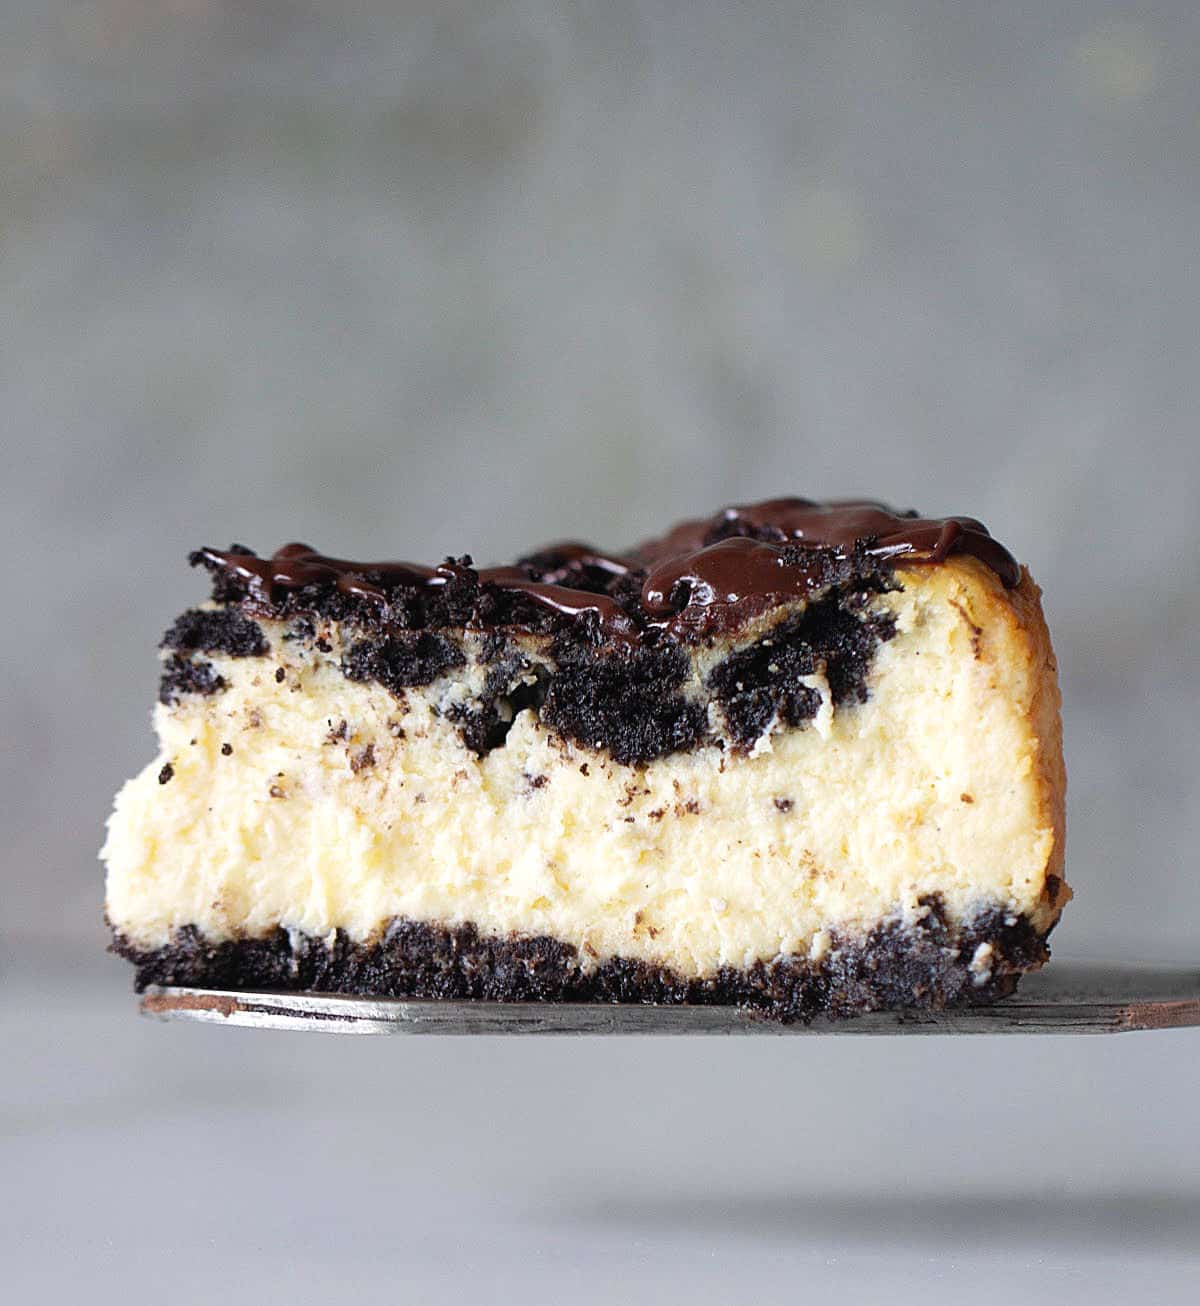 Single slice of Oreo Cheesecake on a cake server, grey background